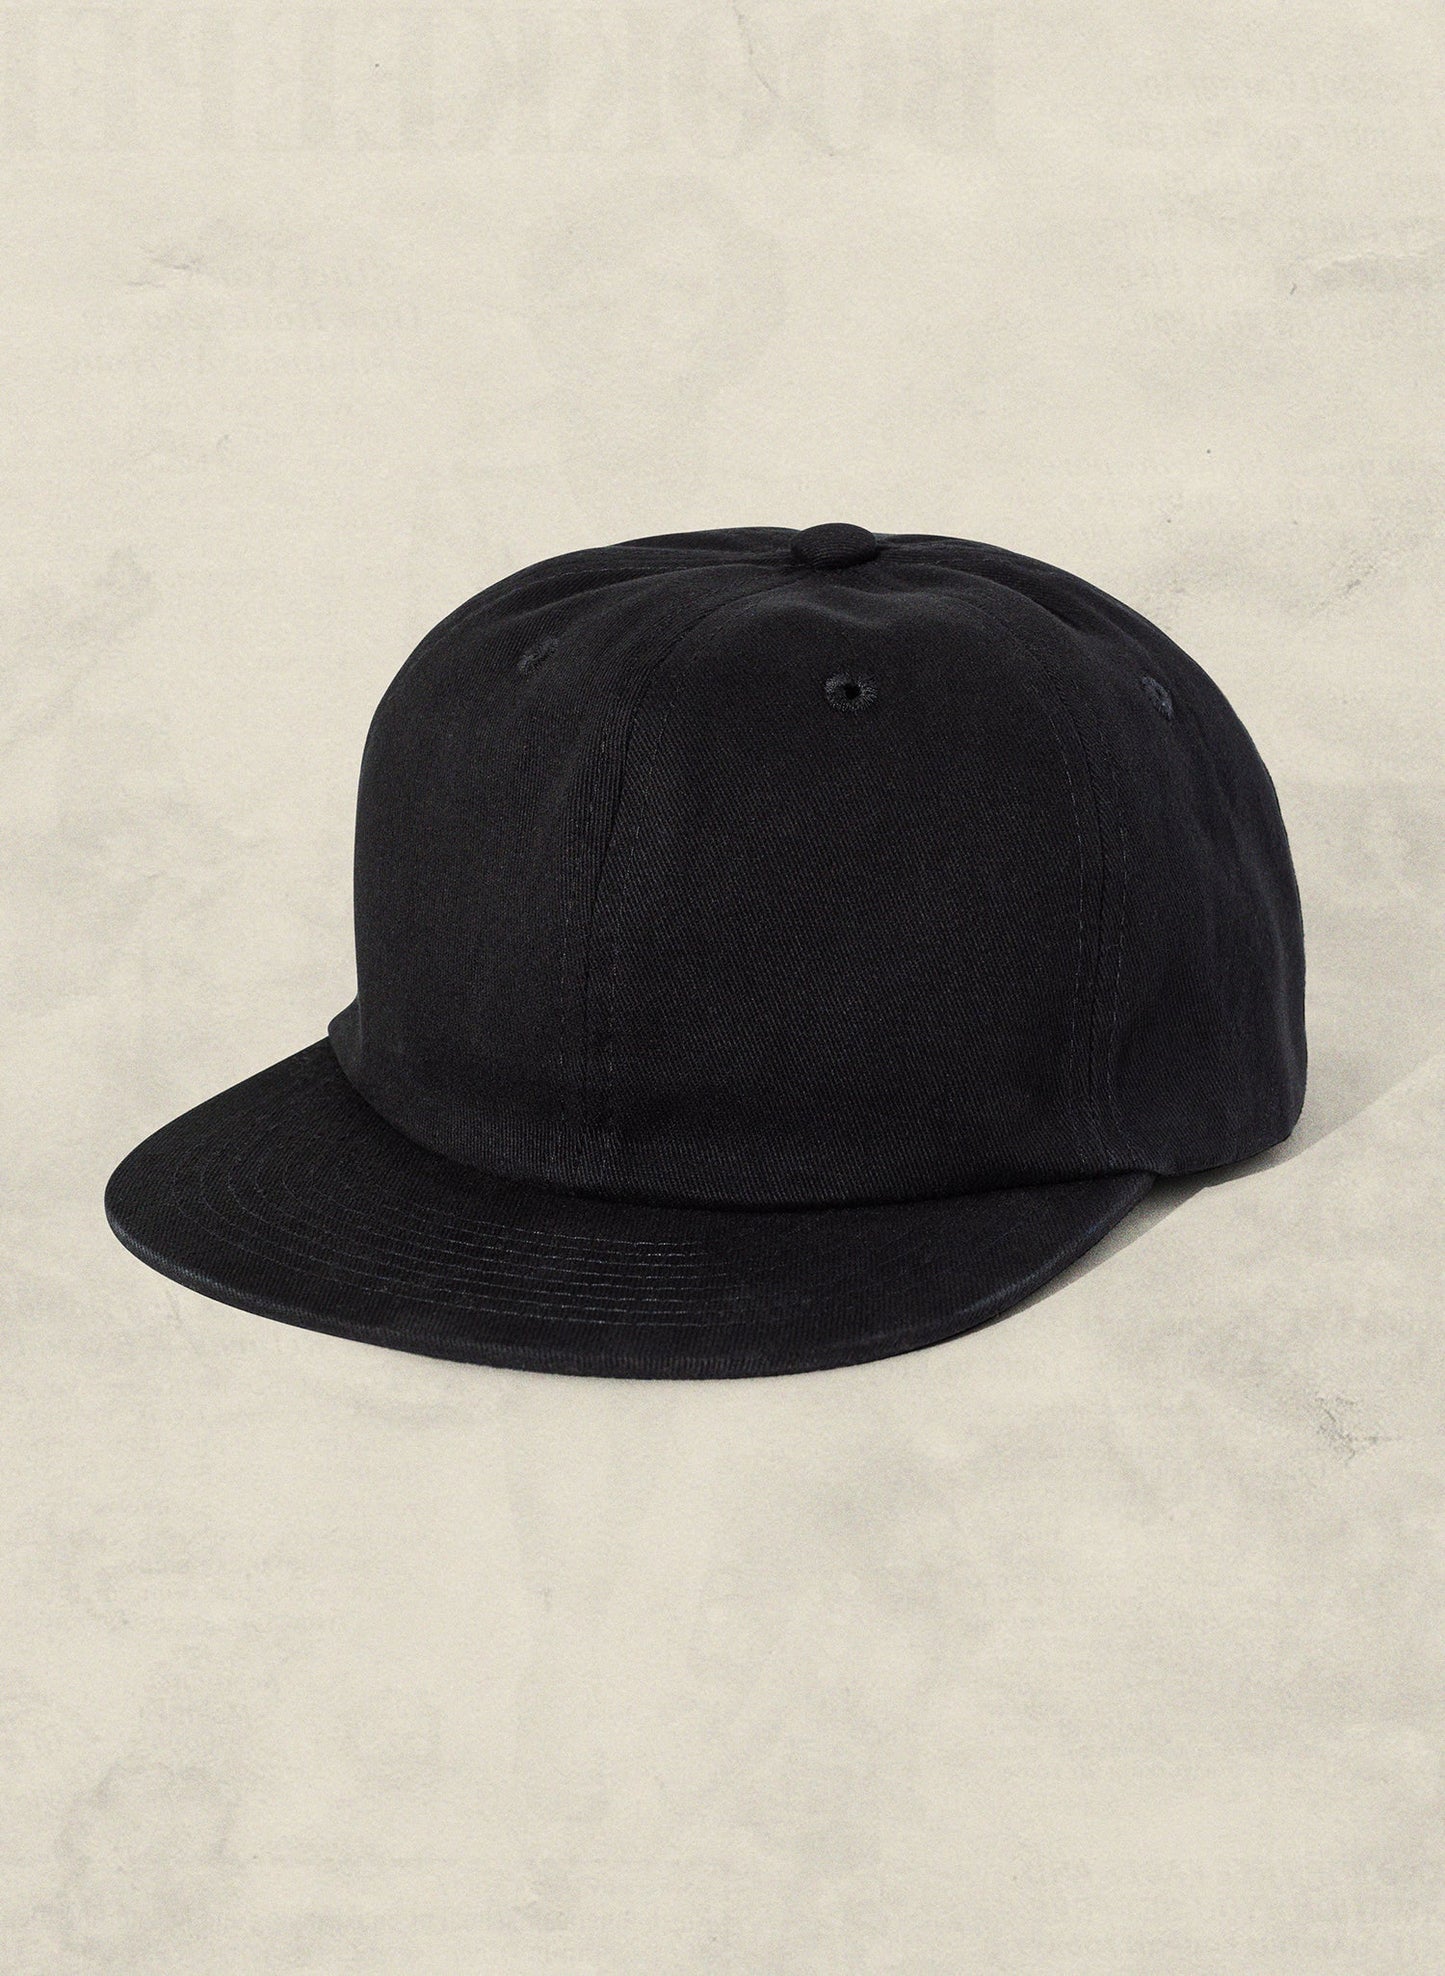 Weld Mfg Field Trip Hat - Unstructured 6 panel brushed cotton twill strapback hat, vintage inspired baseball hat, black